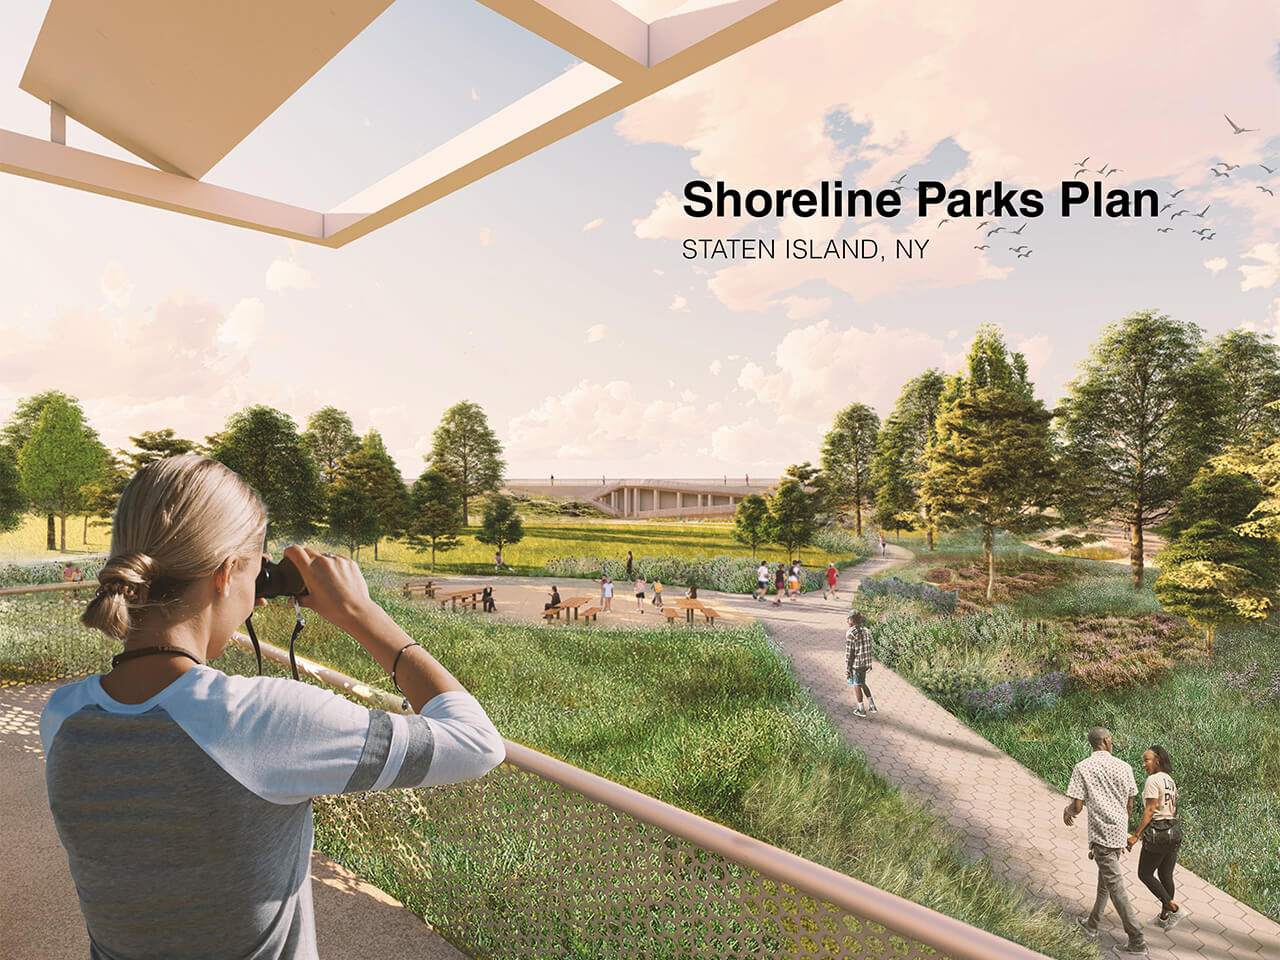 09 East Shore Shoreline Parks Plan credit Starr Whitehouse 1